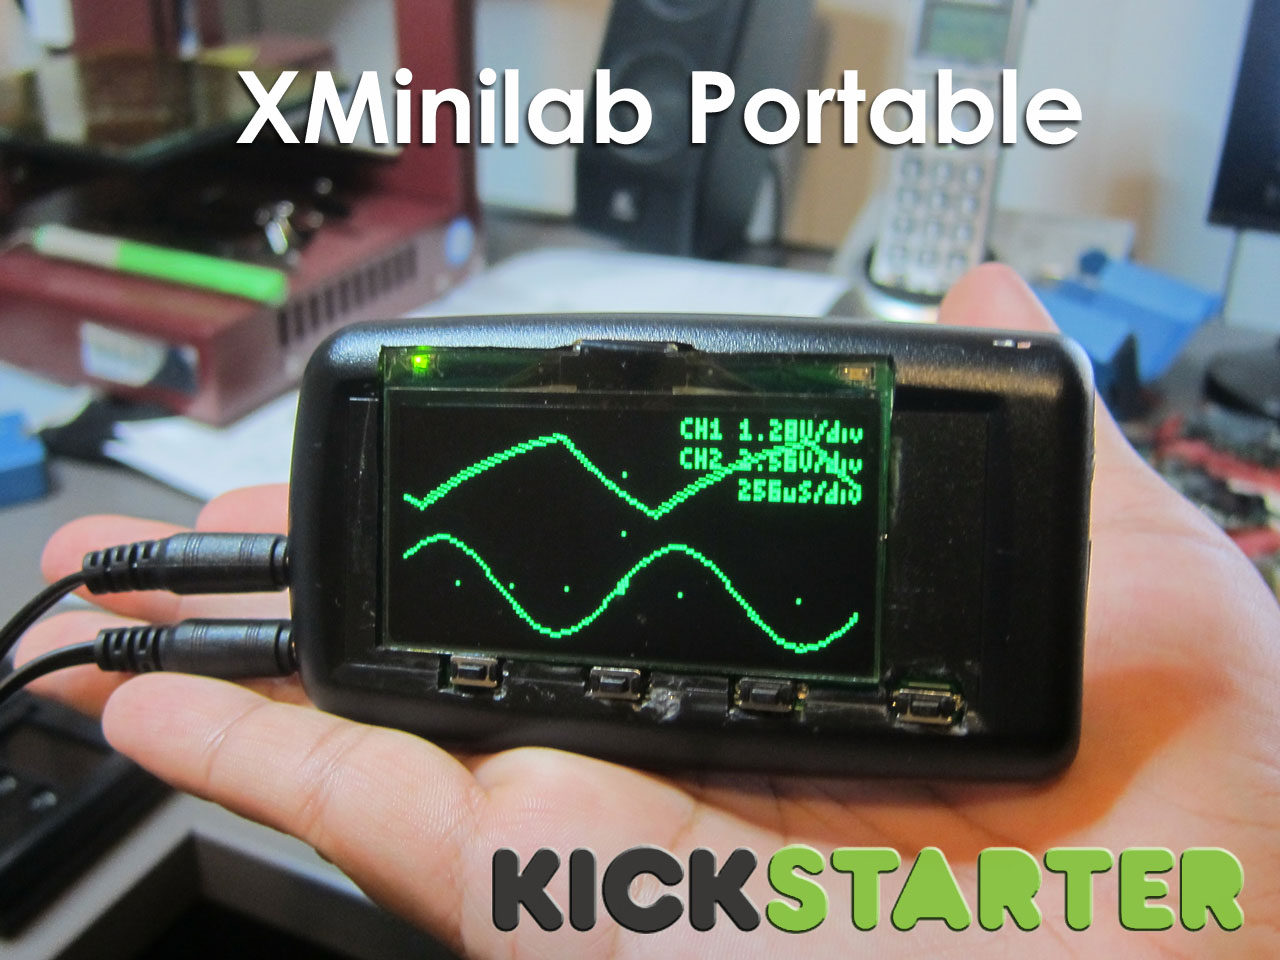 Xminilab Portable on KickStarter